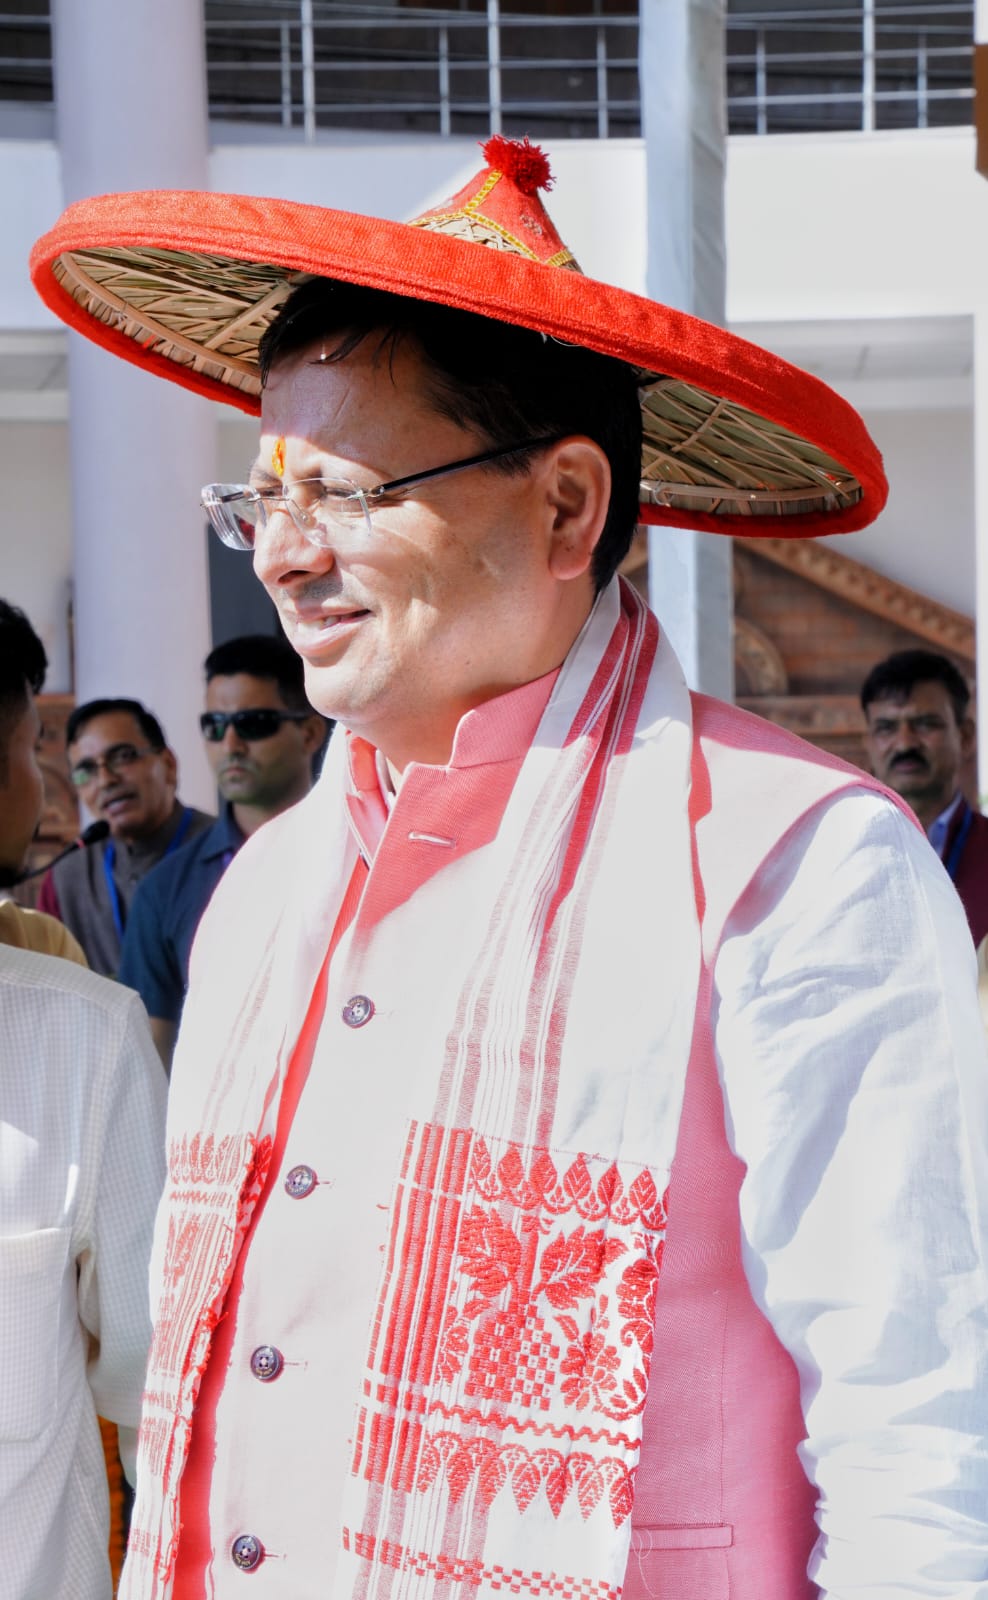 मुख्यमंत्री ने 4 दिवसीय सांस्कृतिक उत्सव निनाद का भी किया शुभारंभ